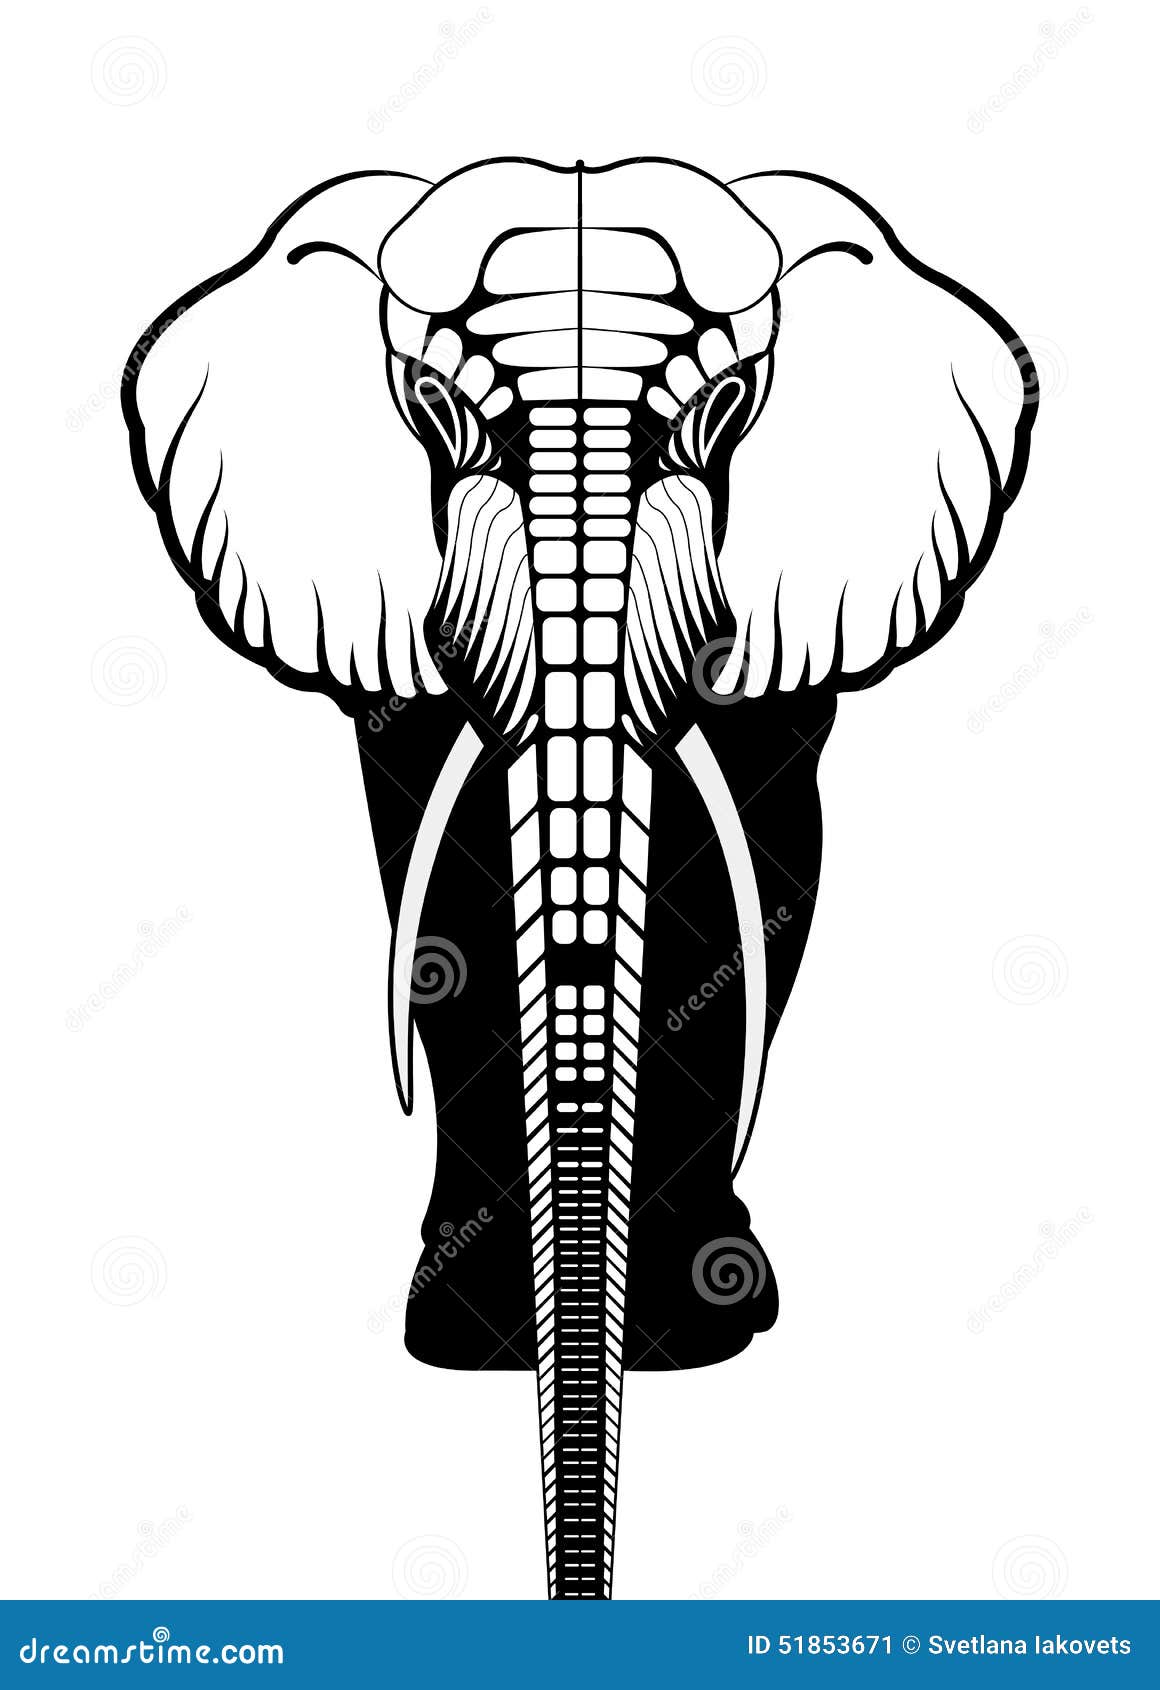 White Elephant Silhouette Animal Stock Illustration ...